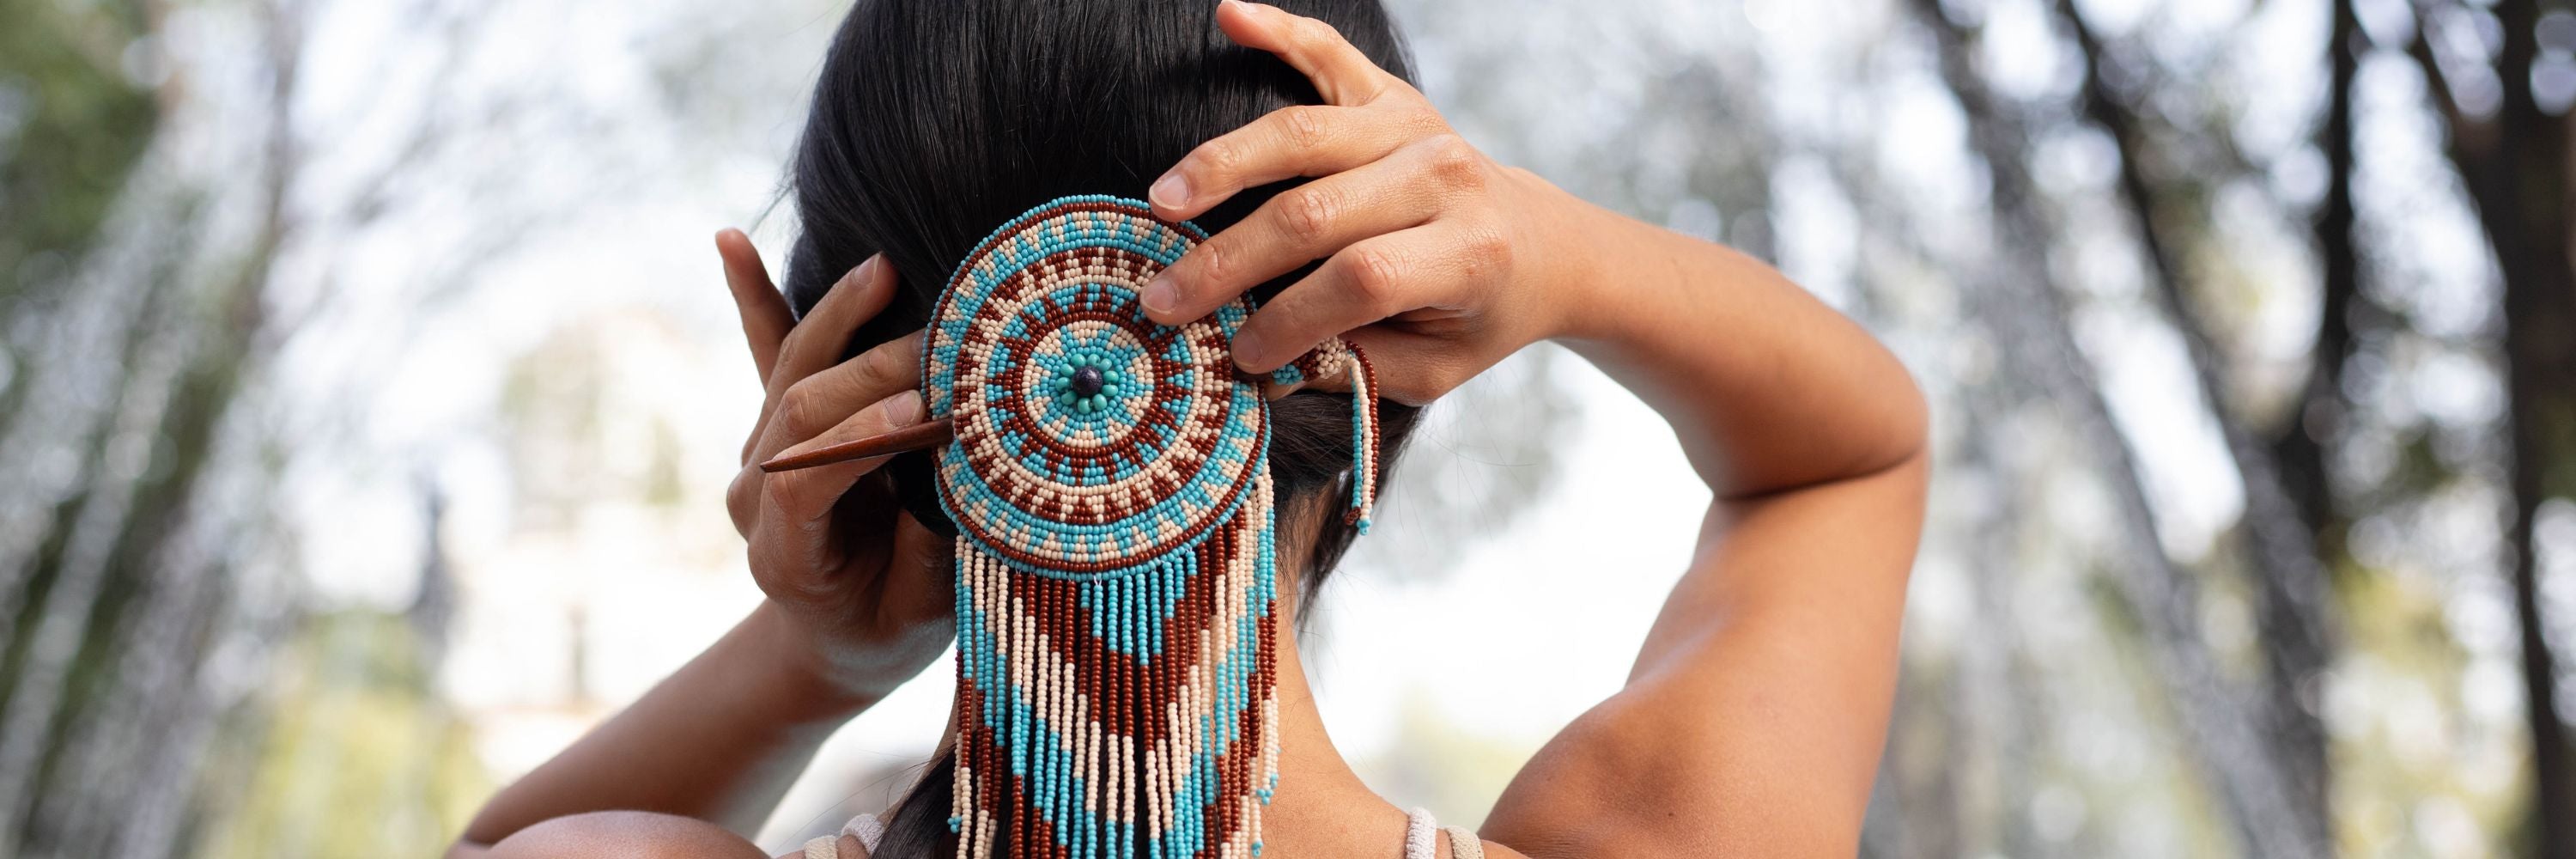 Mother Sierra beaded hair jewelry - Stylish handmade beadwork hair pieces